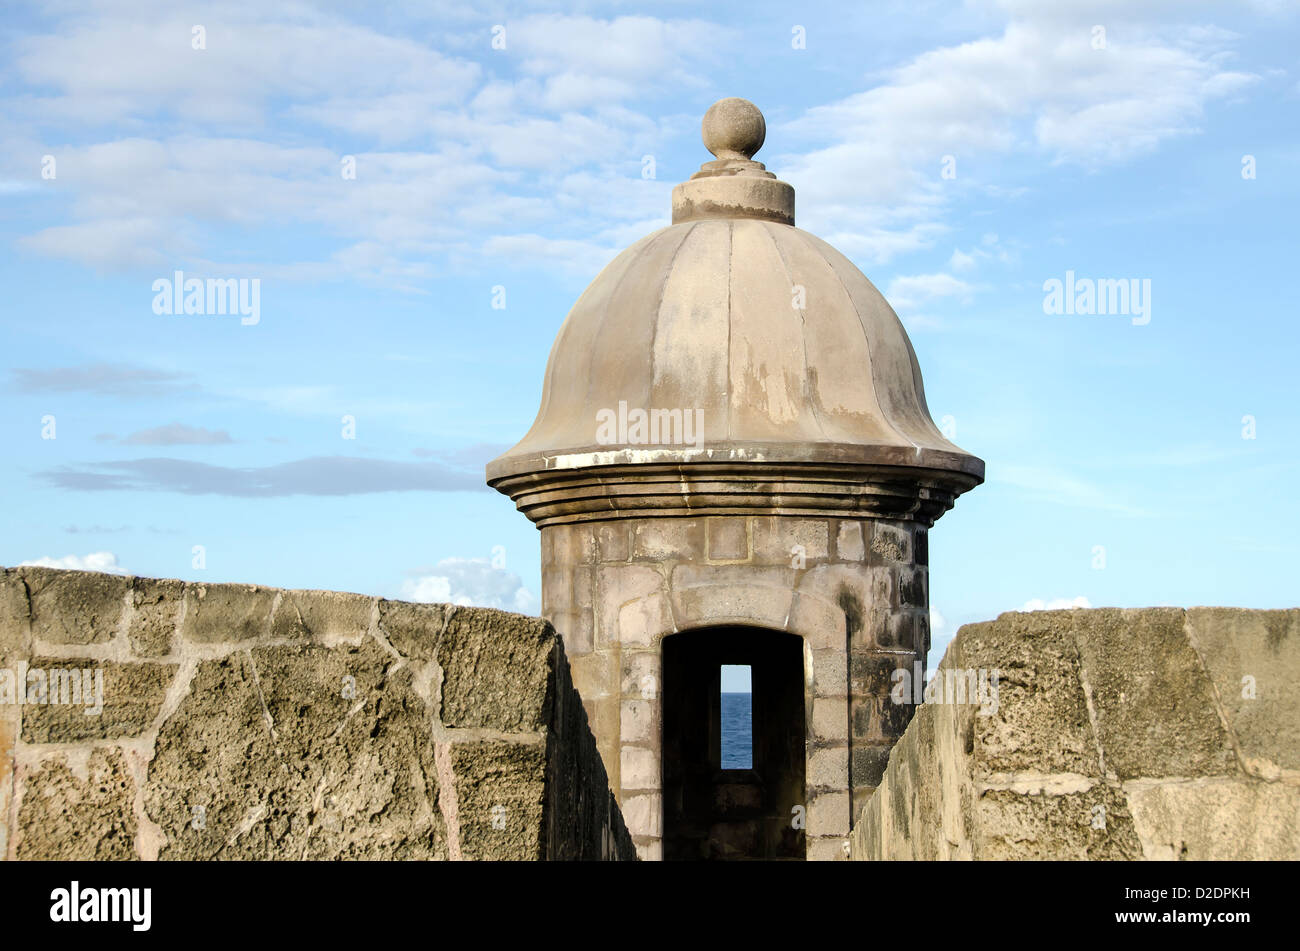 Puerto Rico gewölbt Wachhäuschen (Garita) im Castillo San Felipe del Morro Festung, Altstadt von San Juan Stockfoto